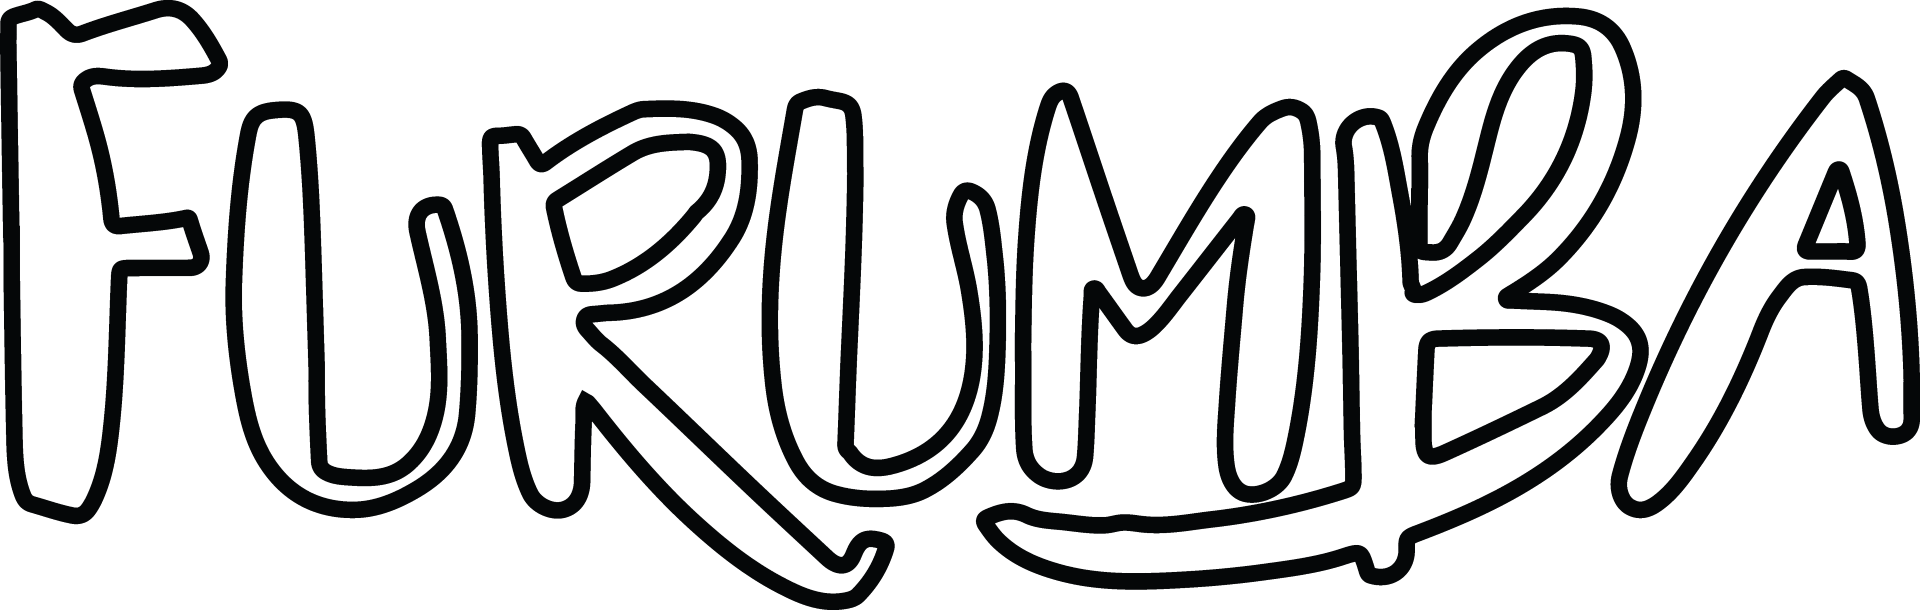 furumba-band-logo